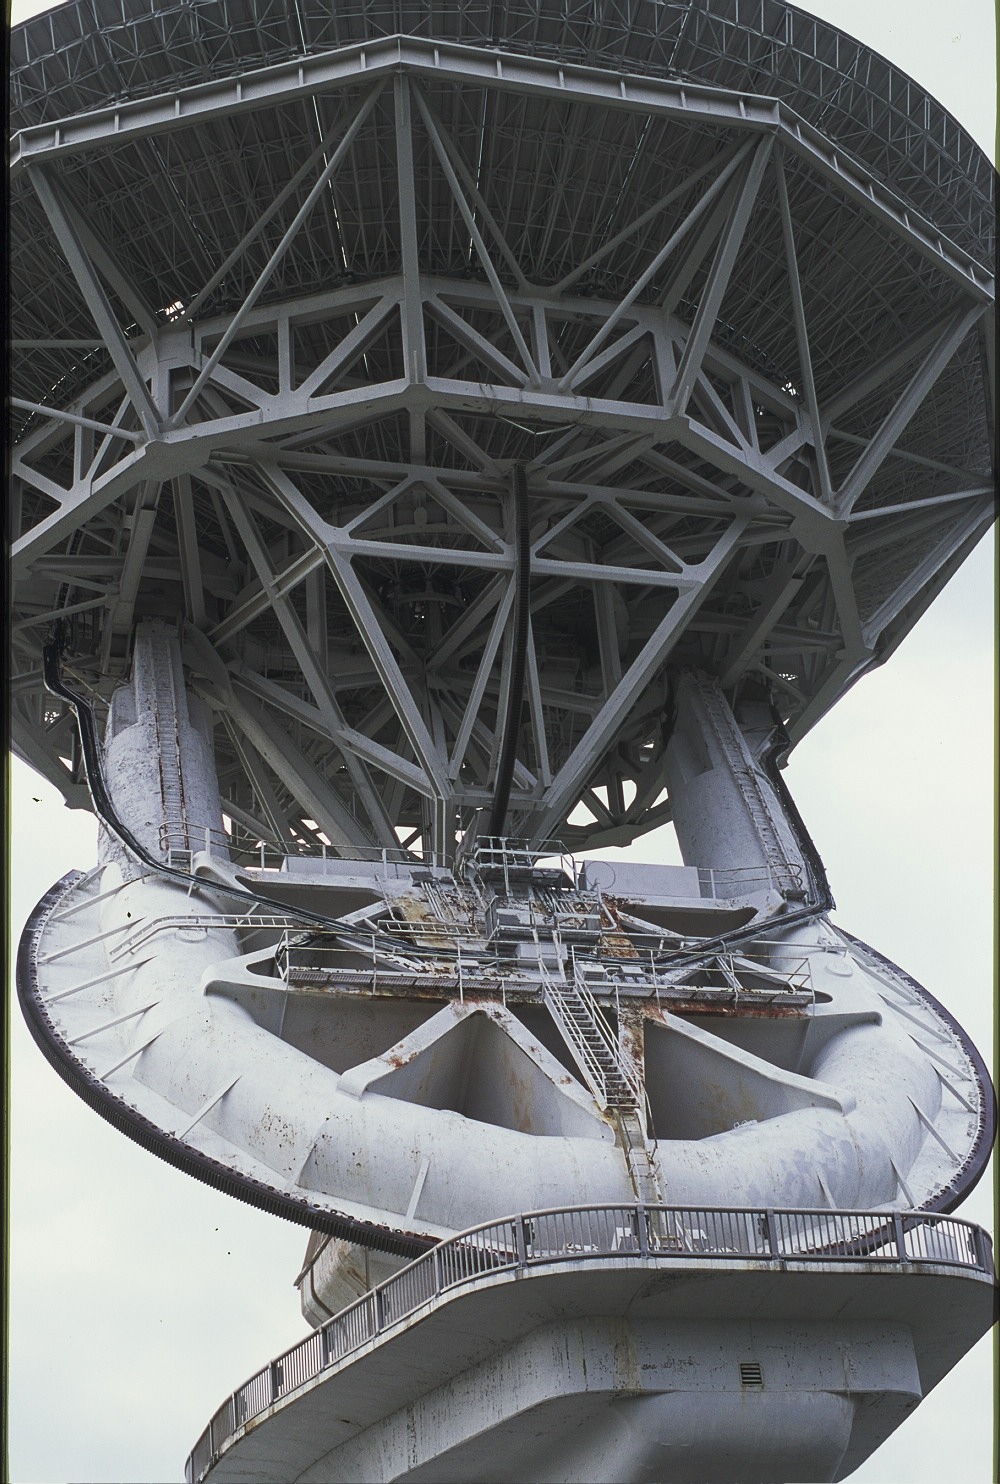 The 140 foot Greenbank Telescope